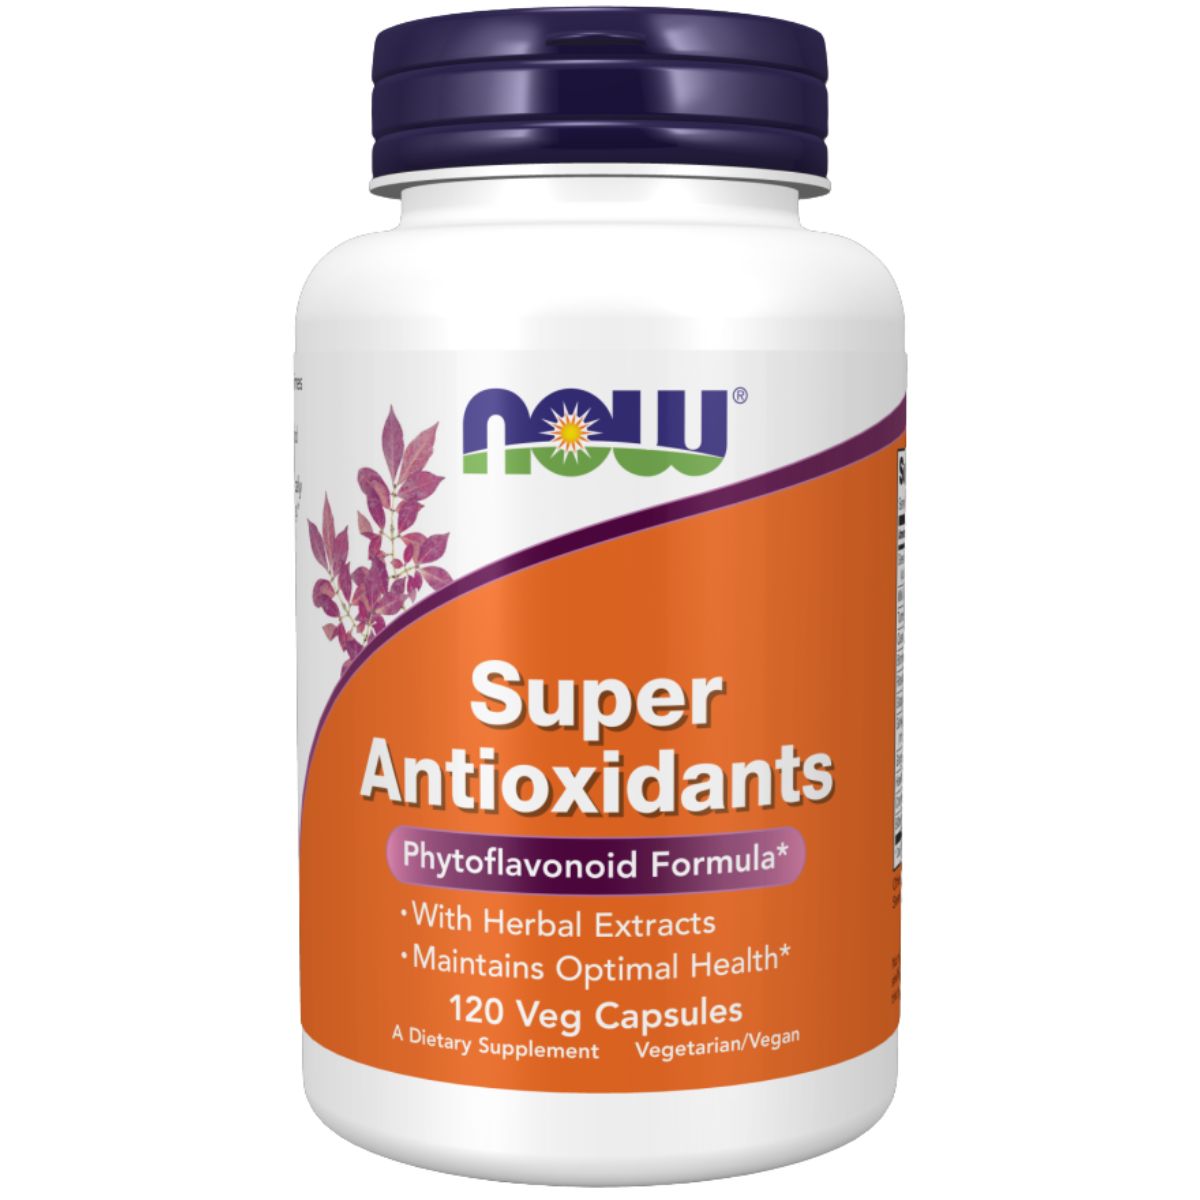 Super Antioxidants on sale!